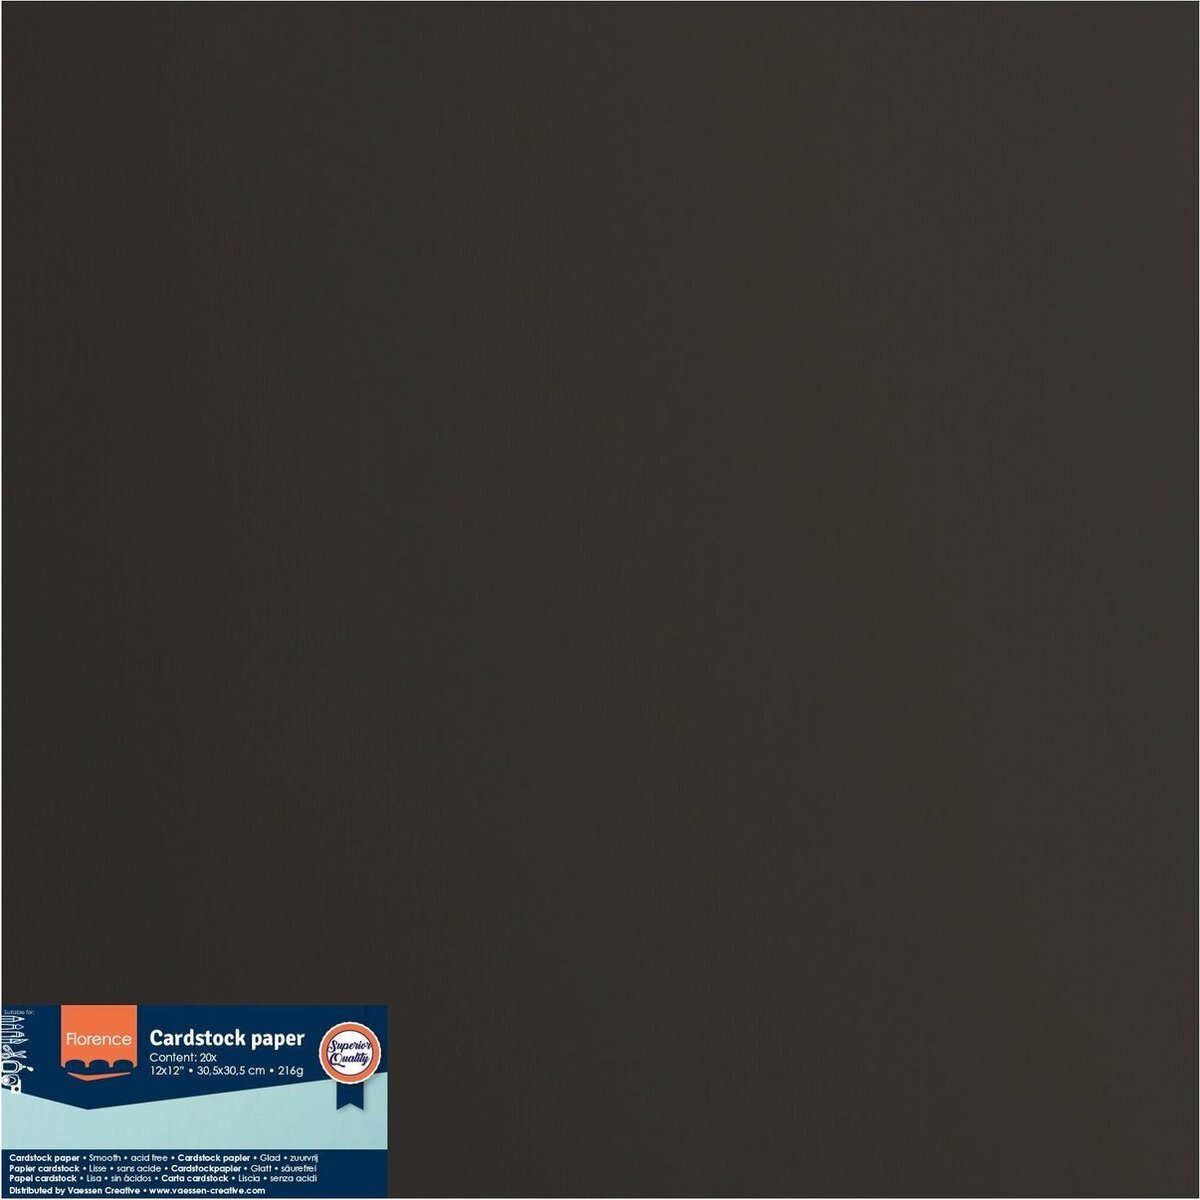 Florence Cardstock - Black - 305x305mm - Gladde textuur - 216g